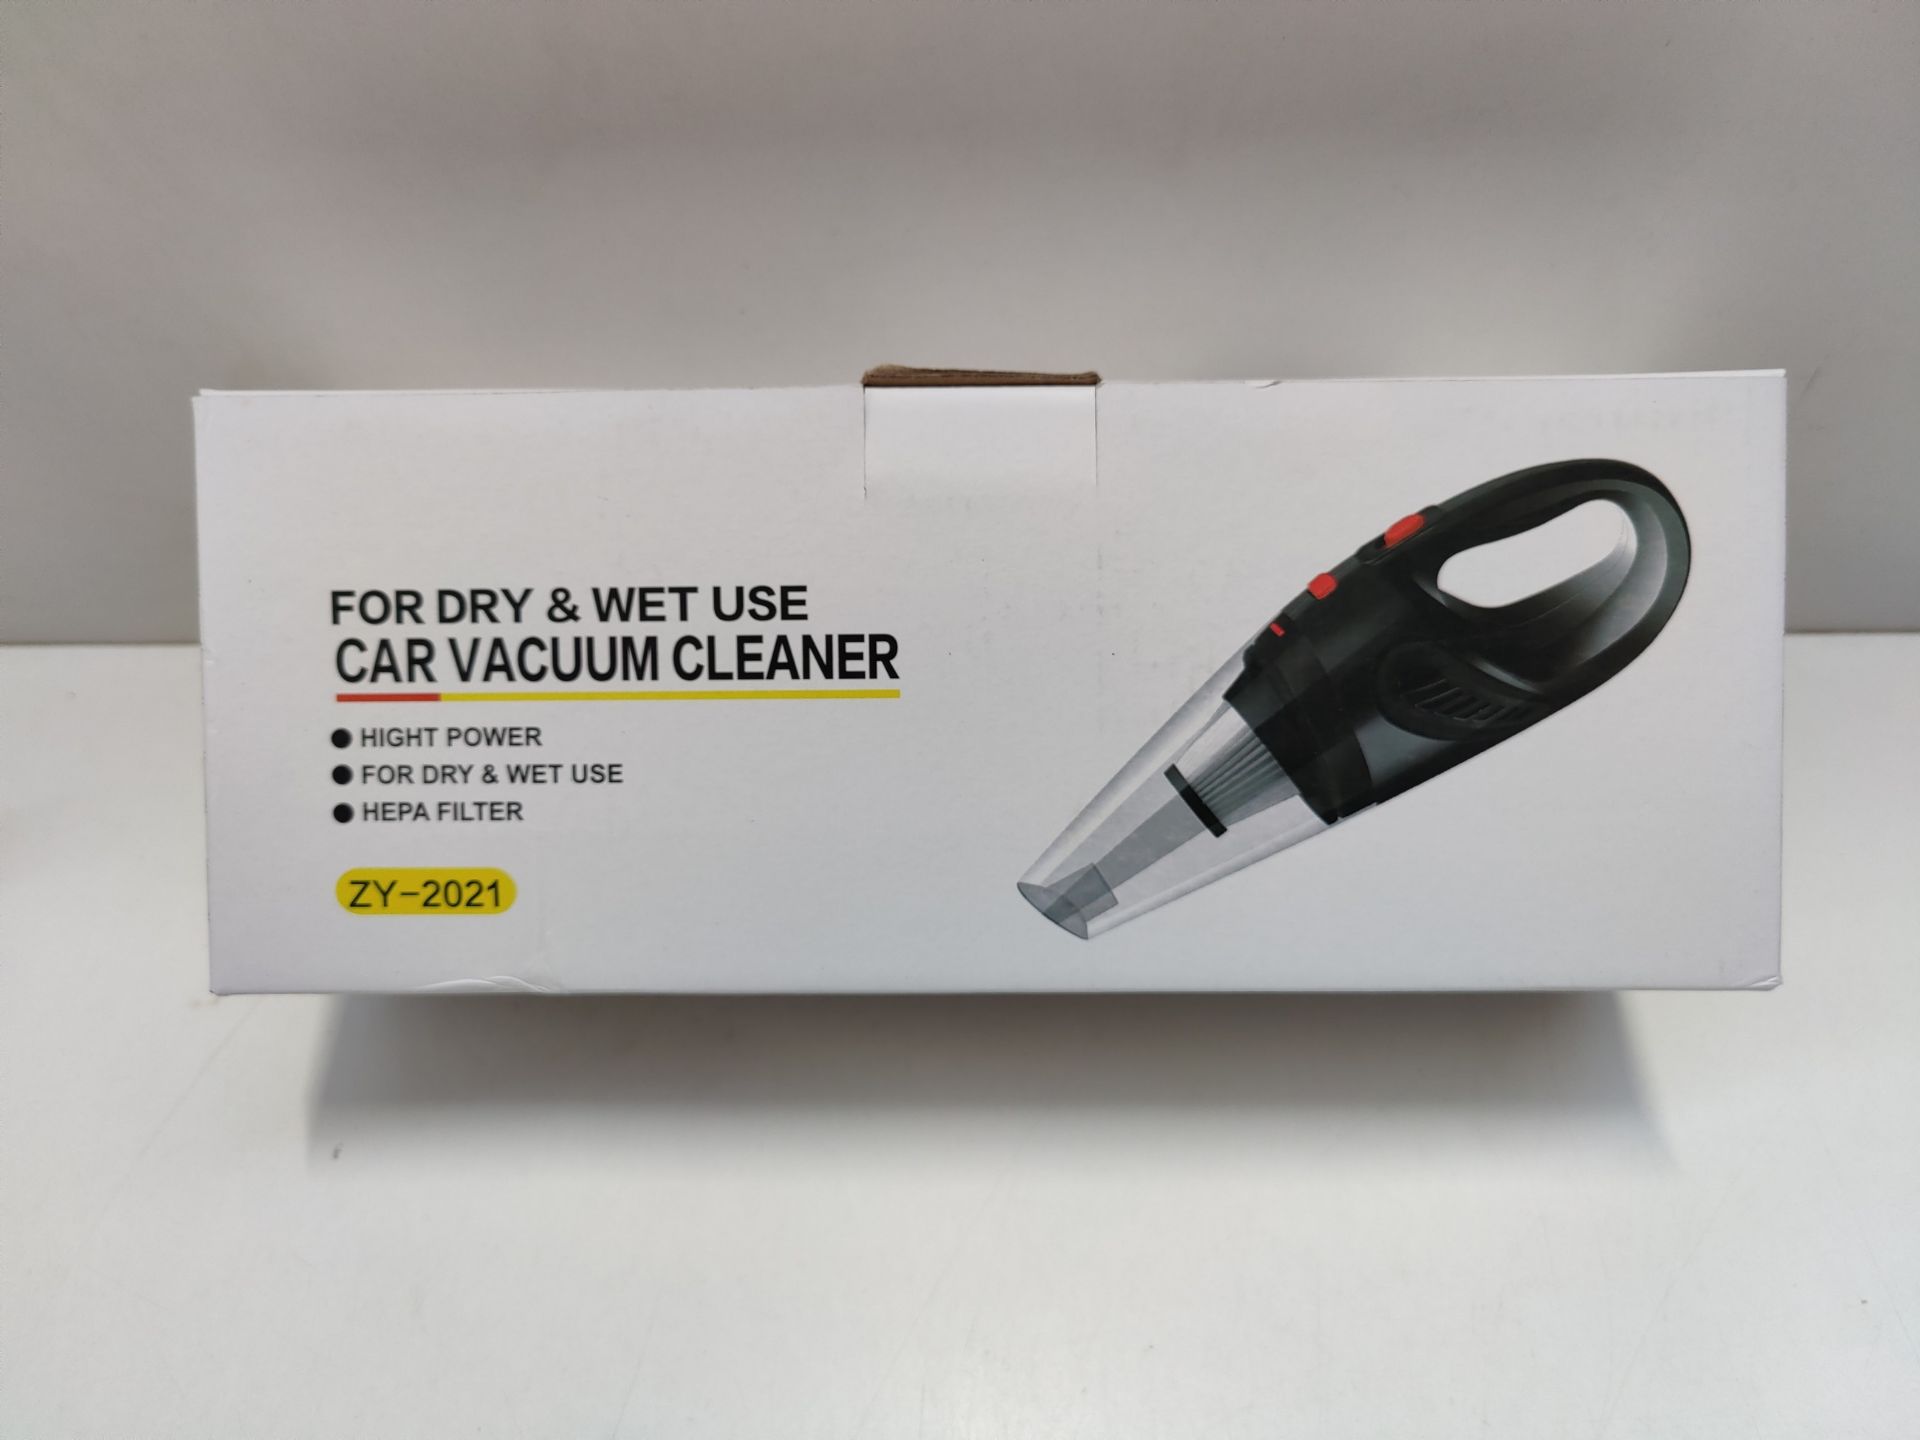 RRP £30.14 UXWEN Handheld Vacuum Cleaner Cordless - Image 2 of 2